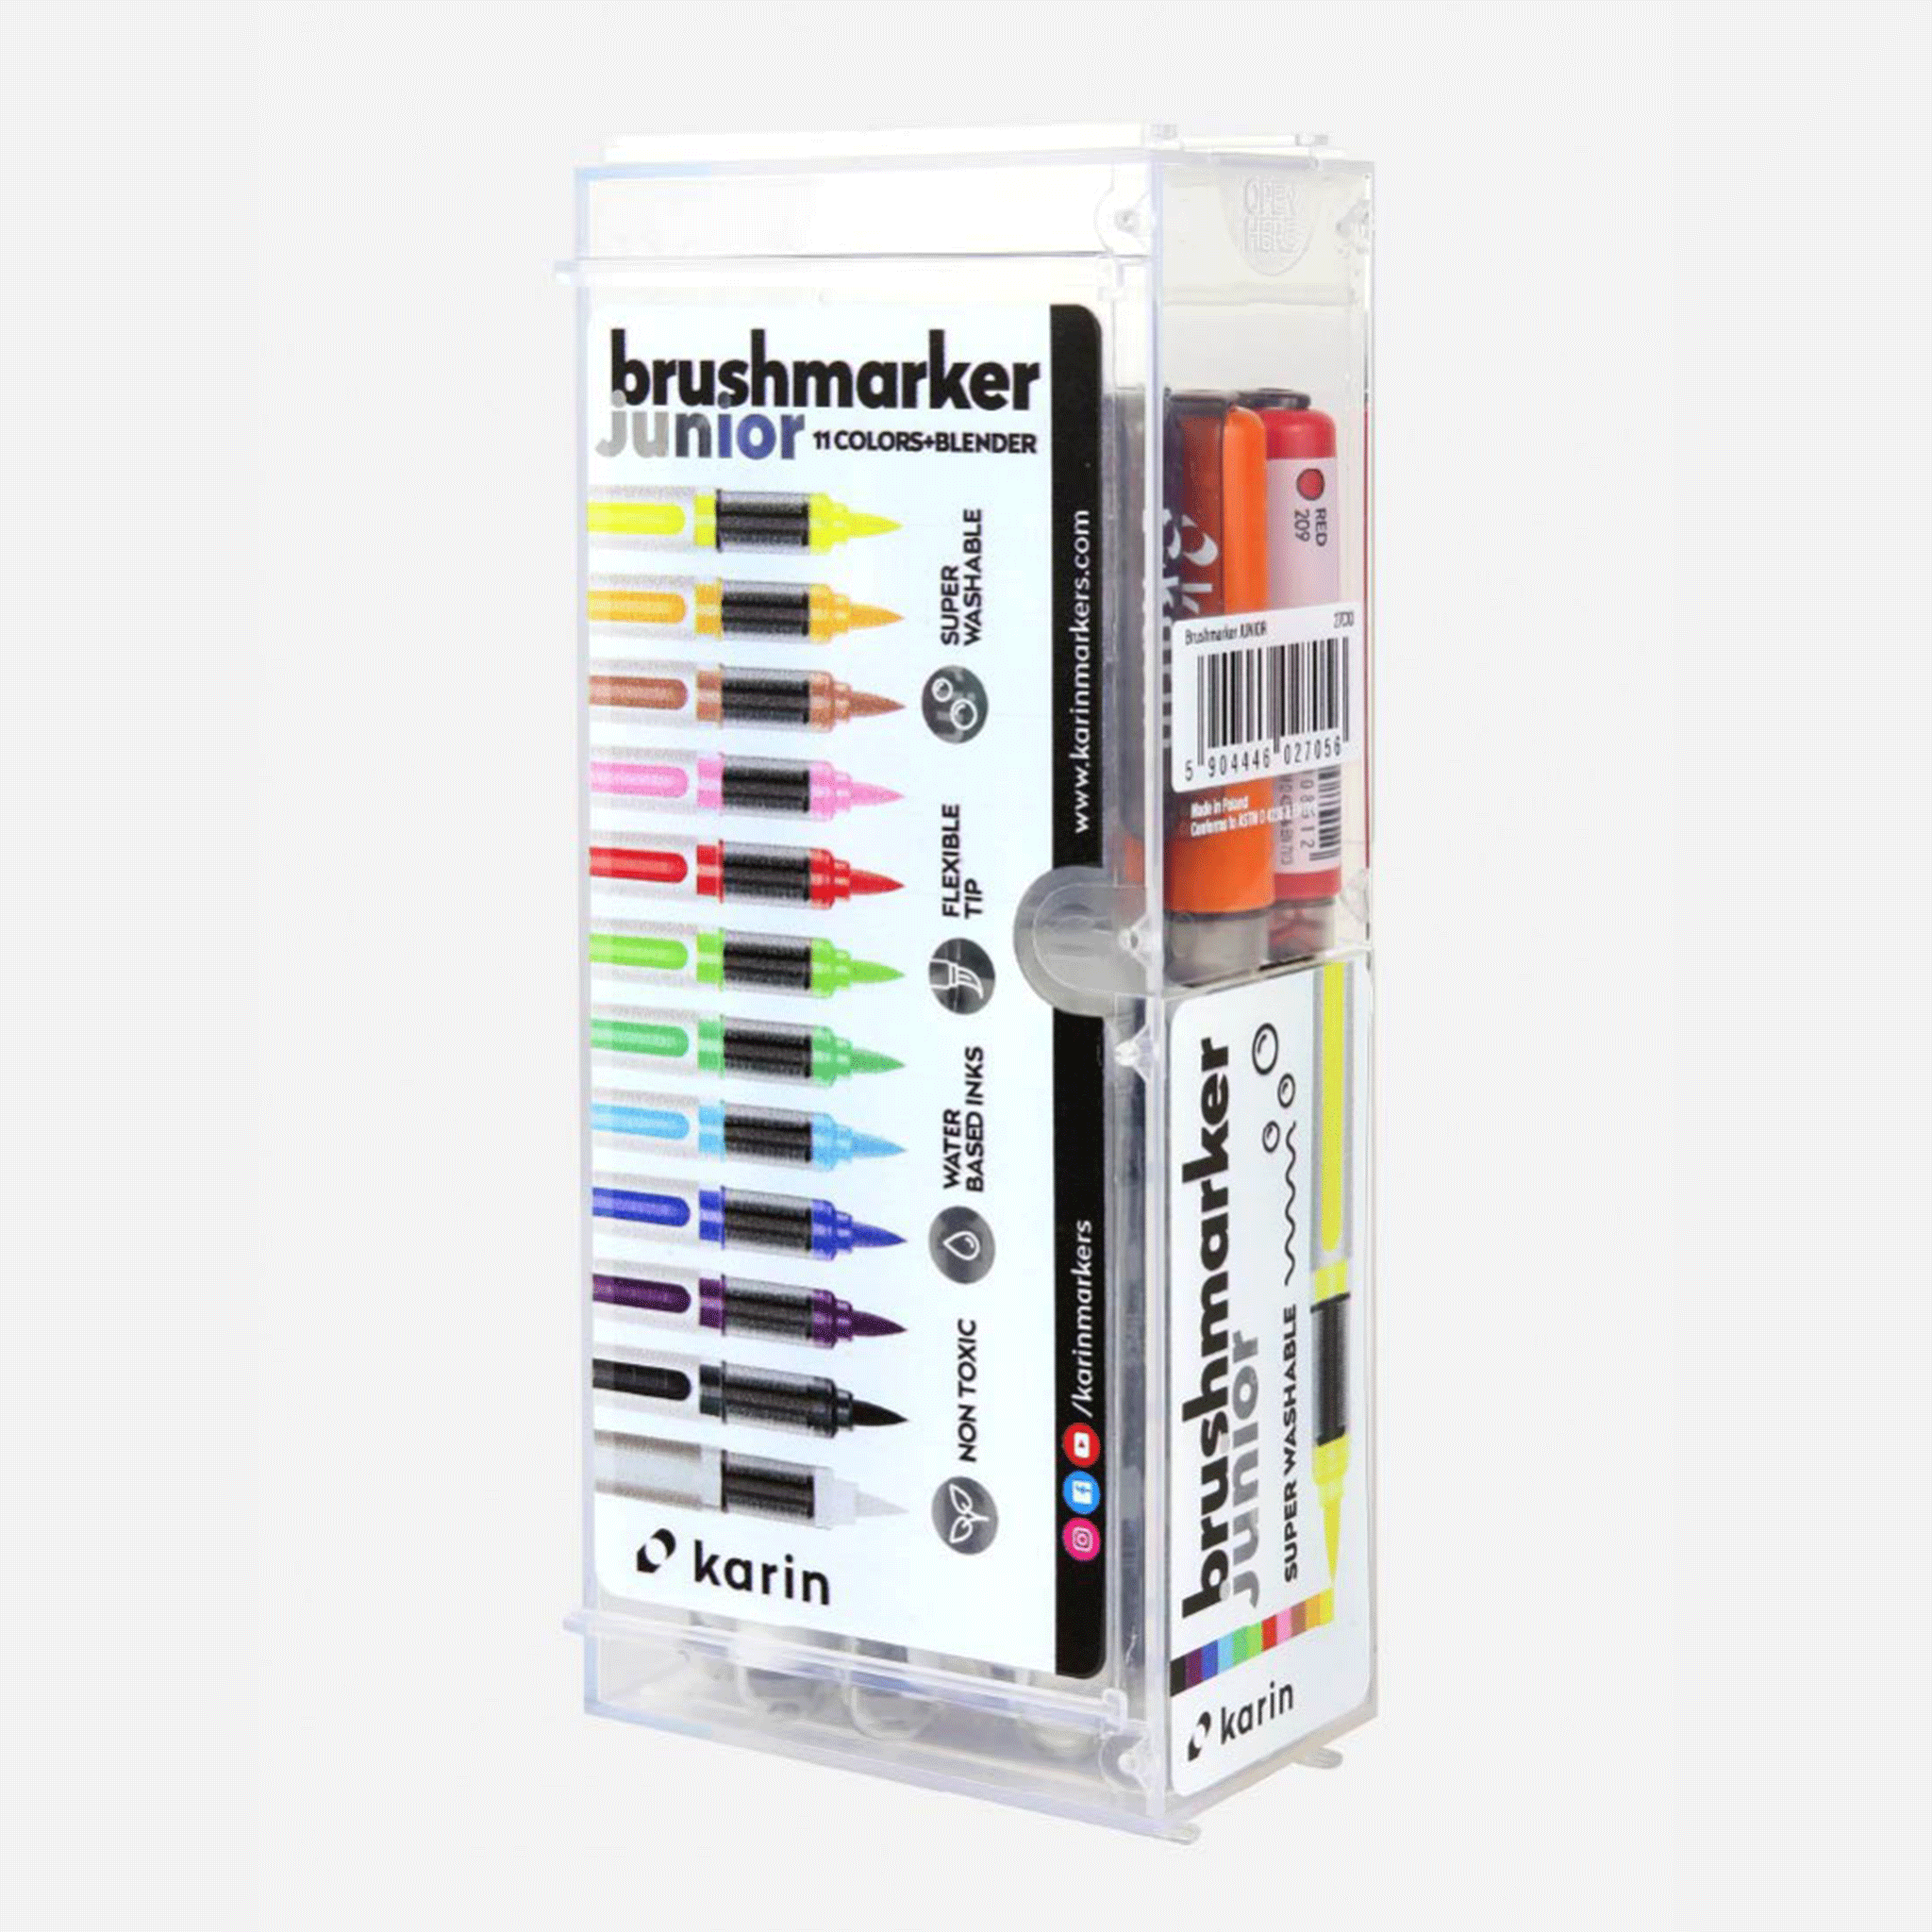 Karin Brushmarker PRO 12pc Neon Set